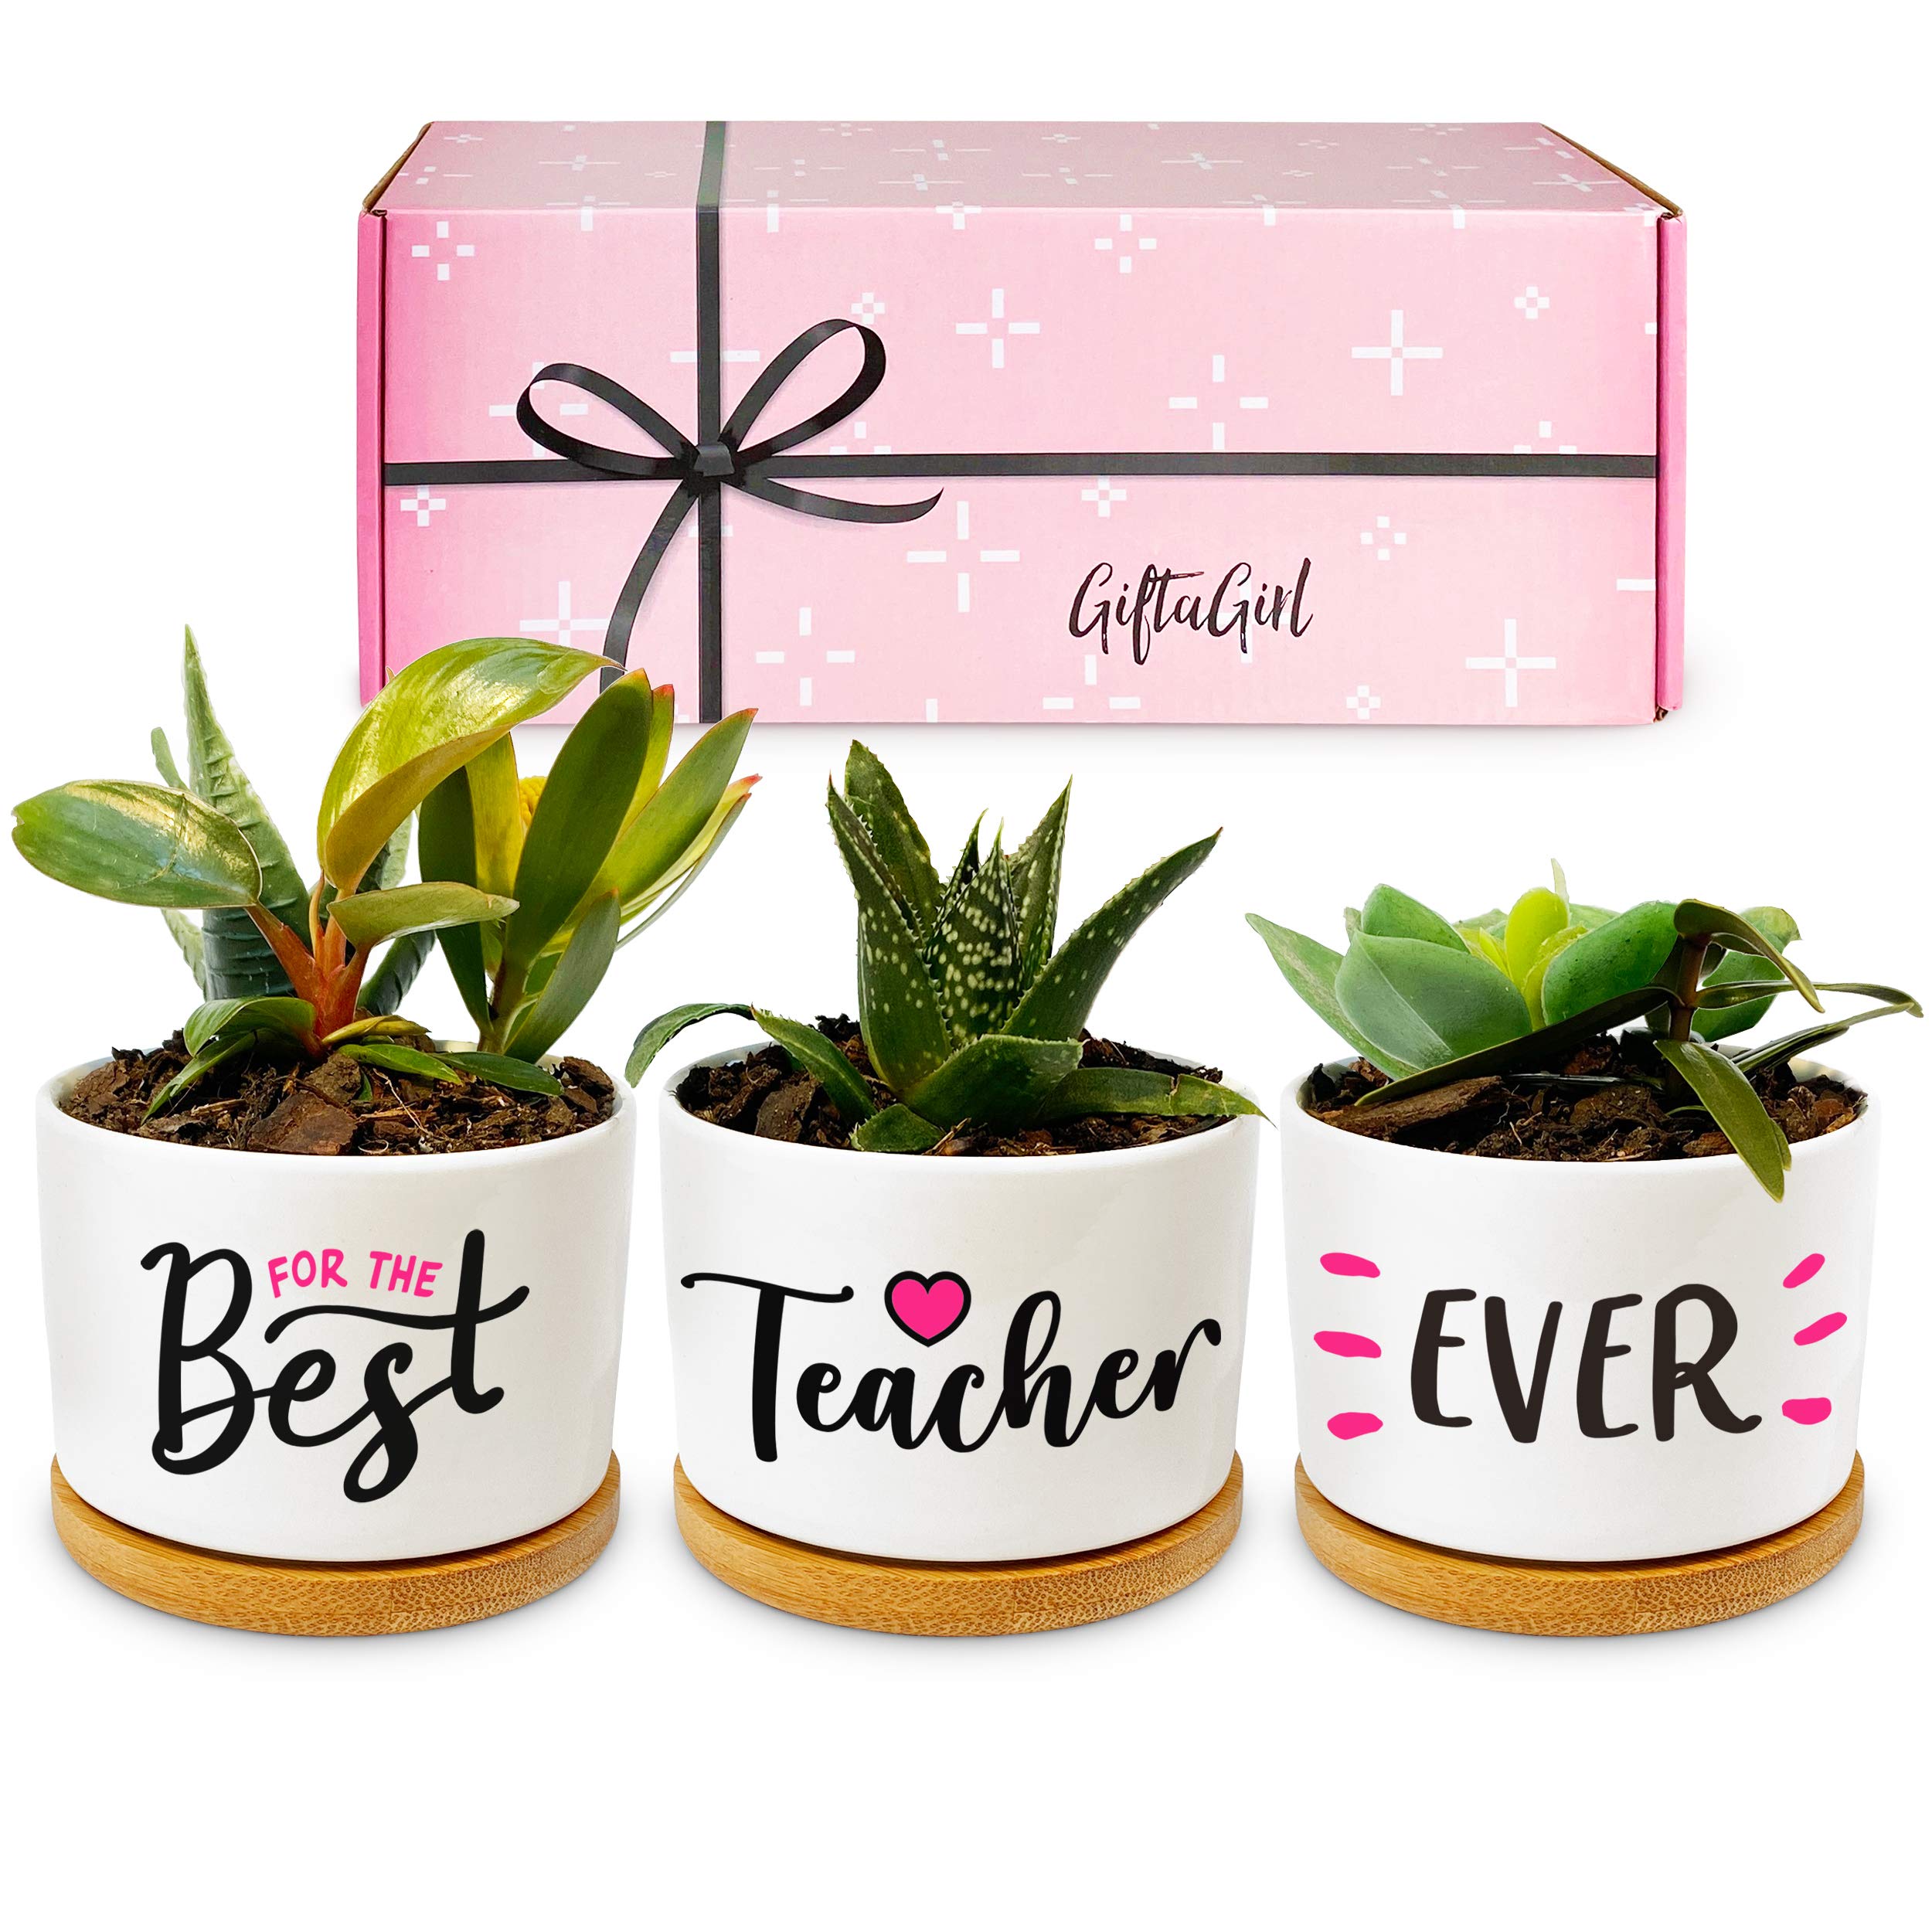 East Gift Ideas for Teachers 12